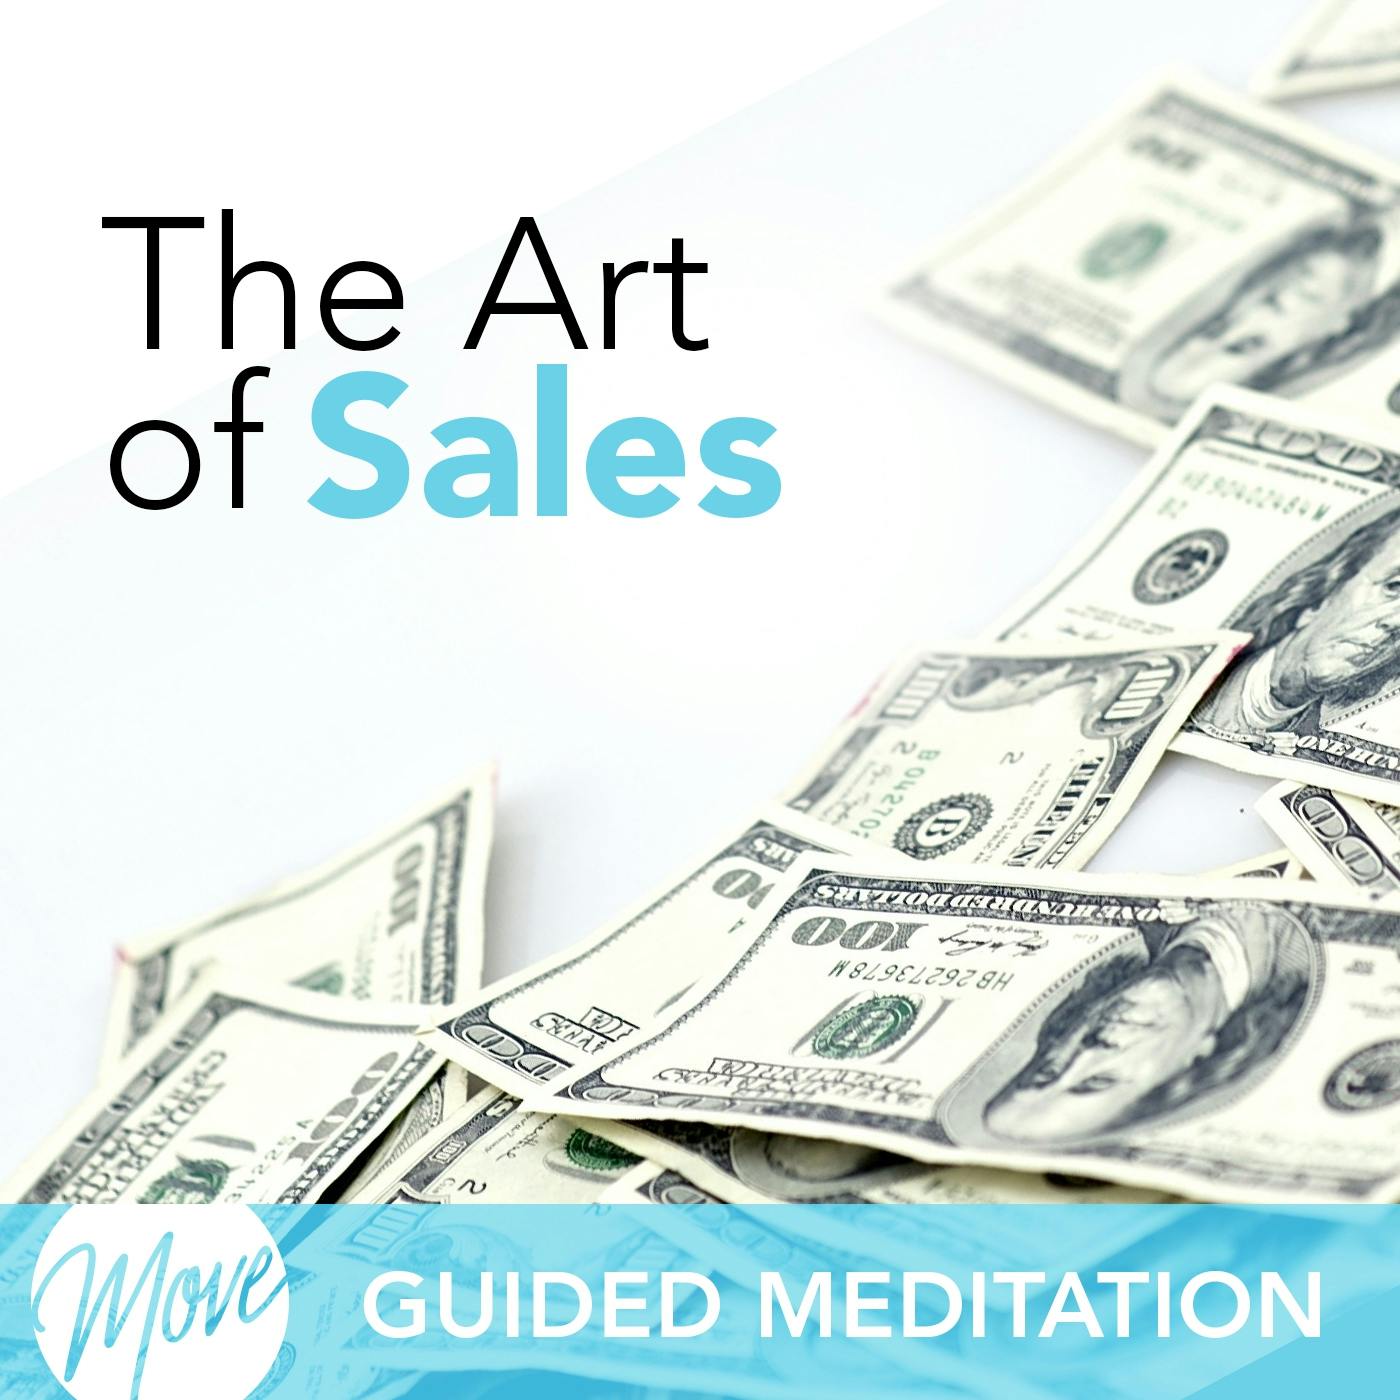 The Art of Sales - Amy Applebaum